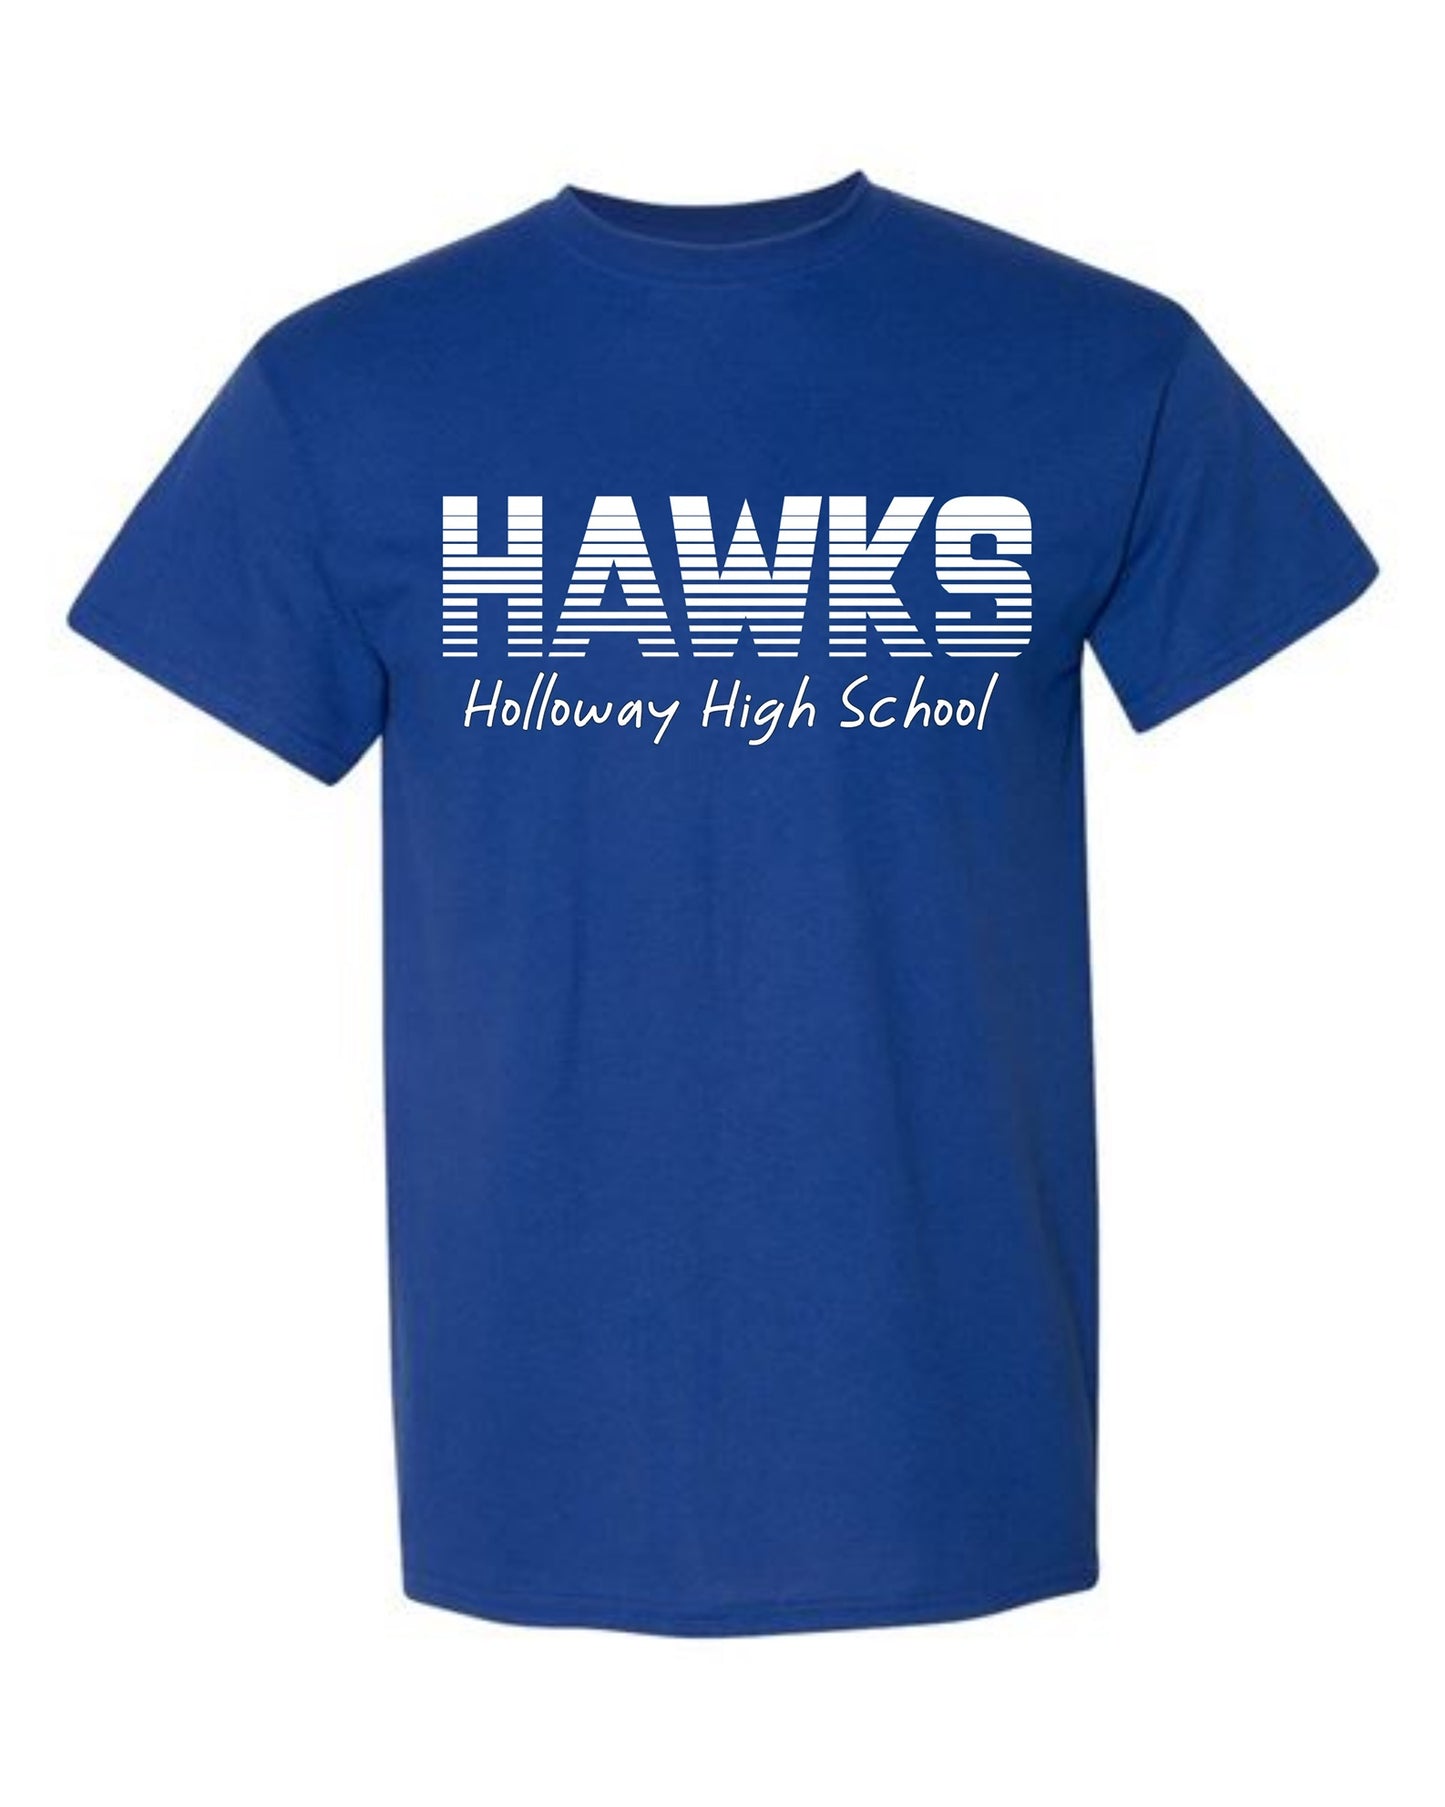 Hawks Tshirt